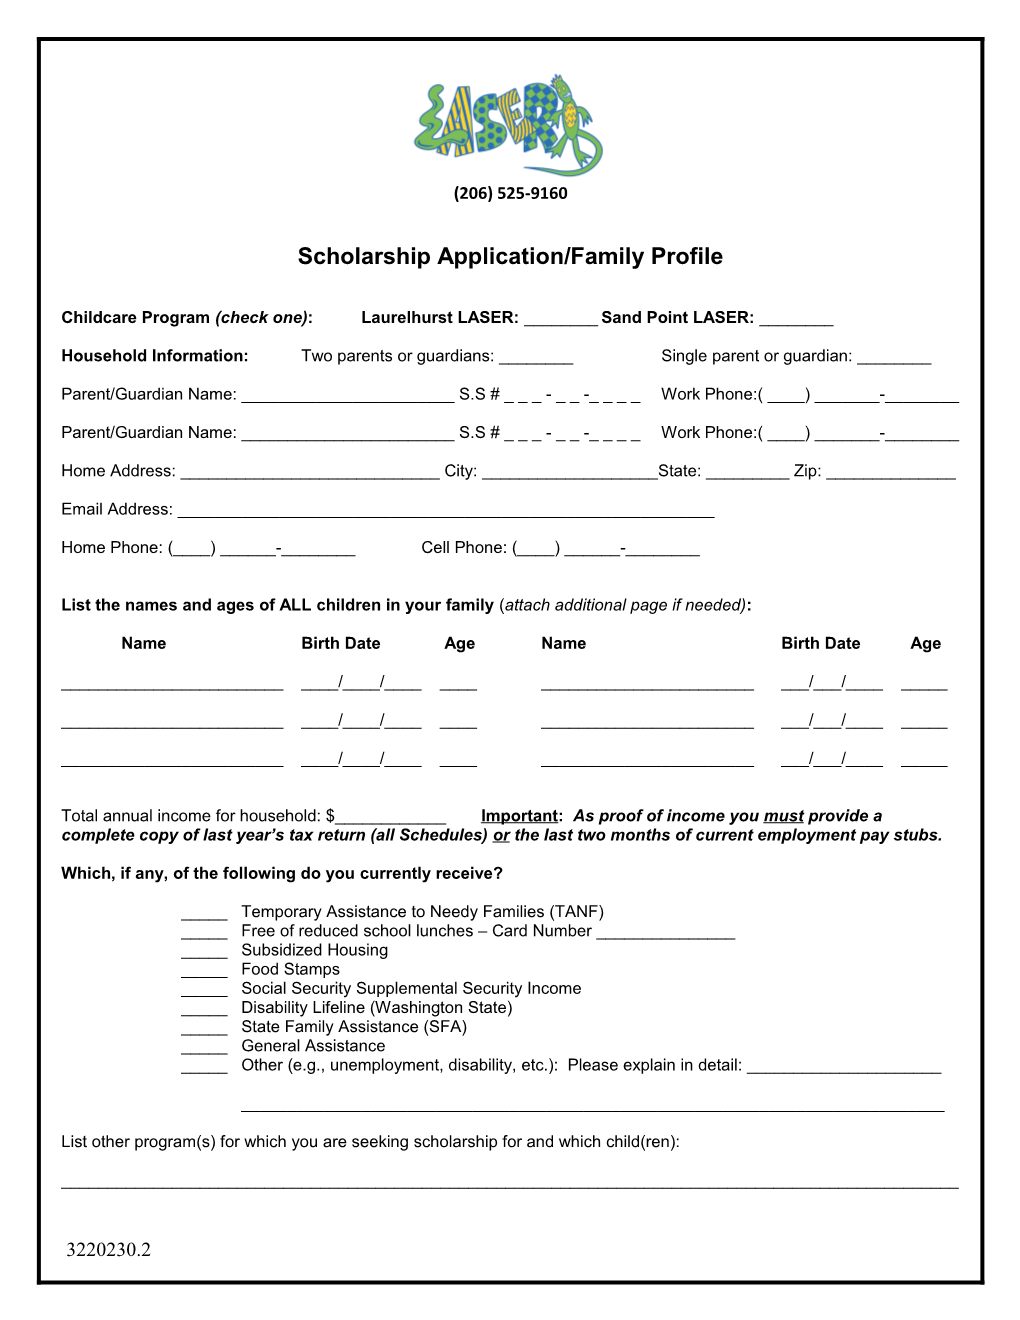 Scholarship Application/Family Profile